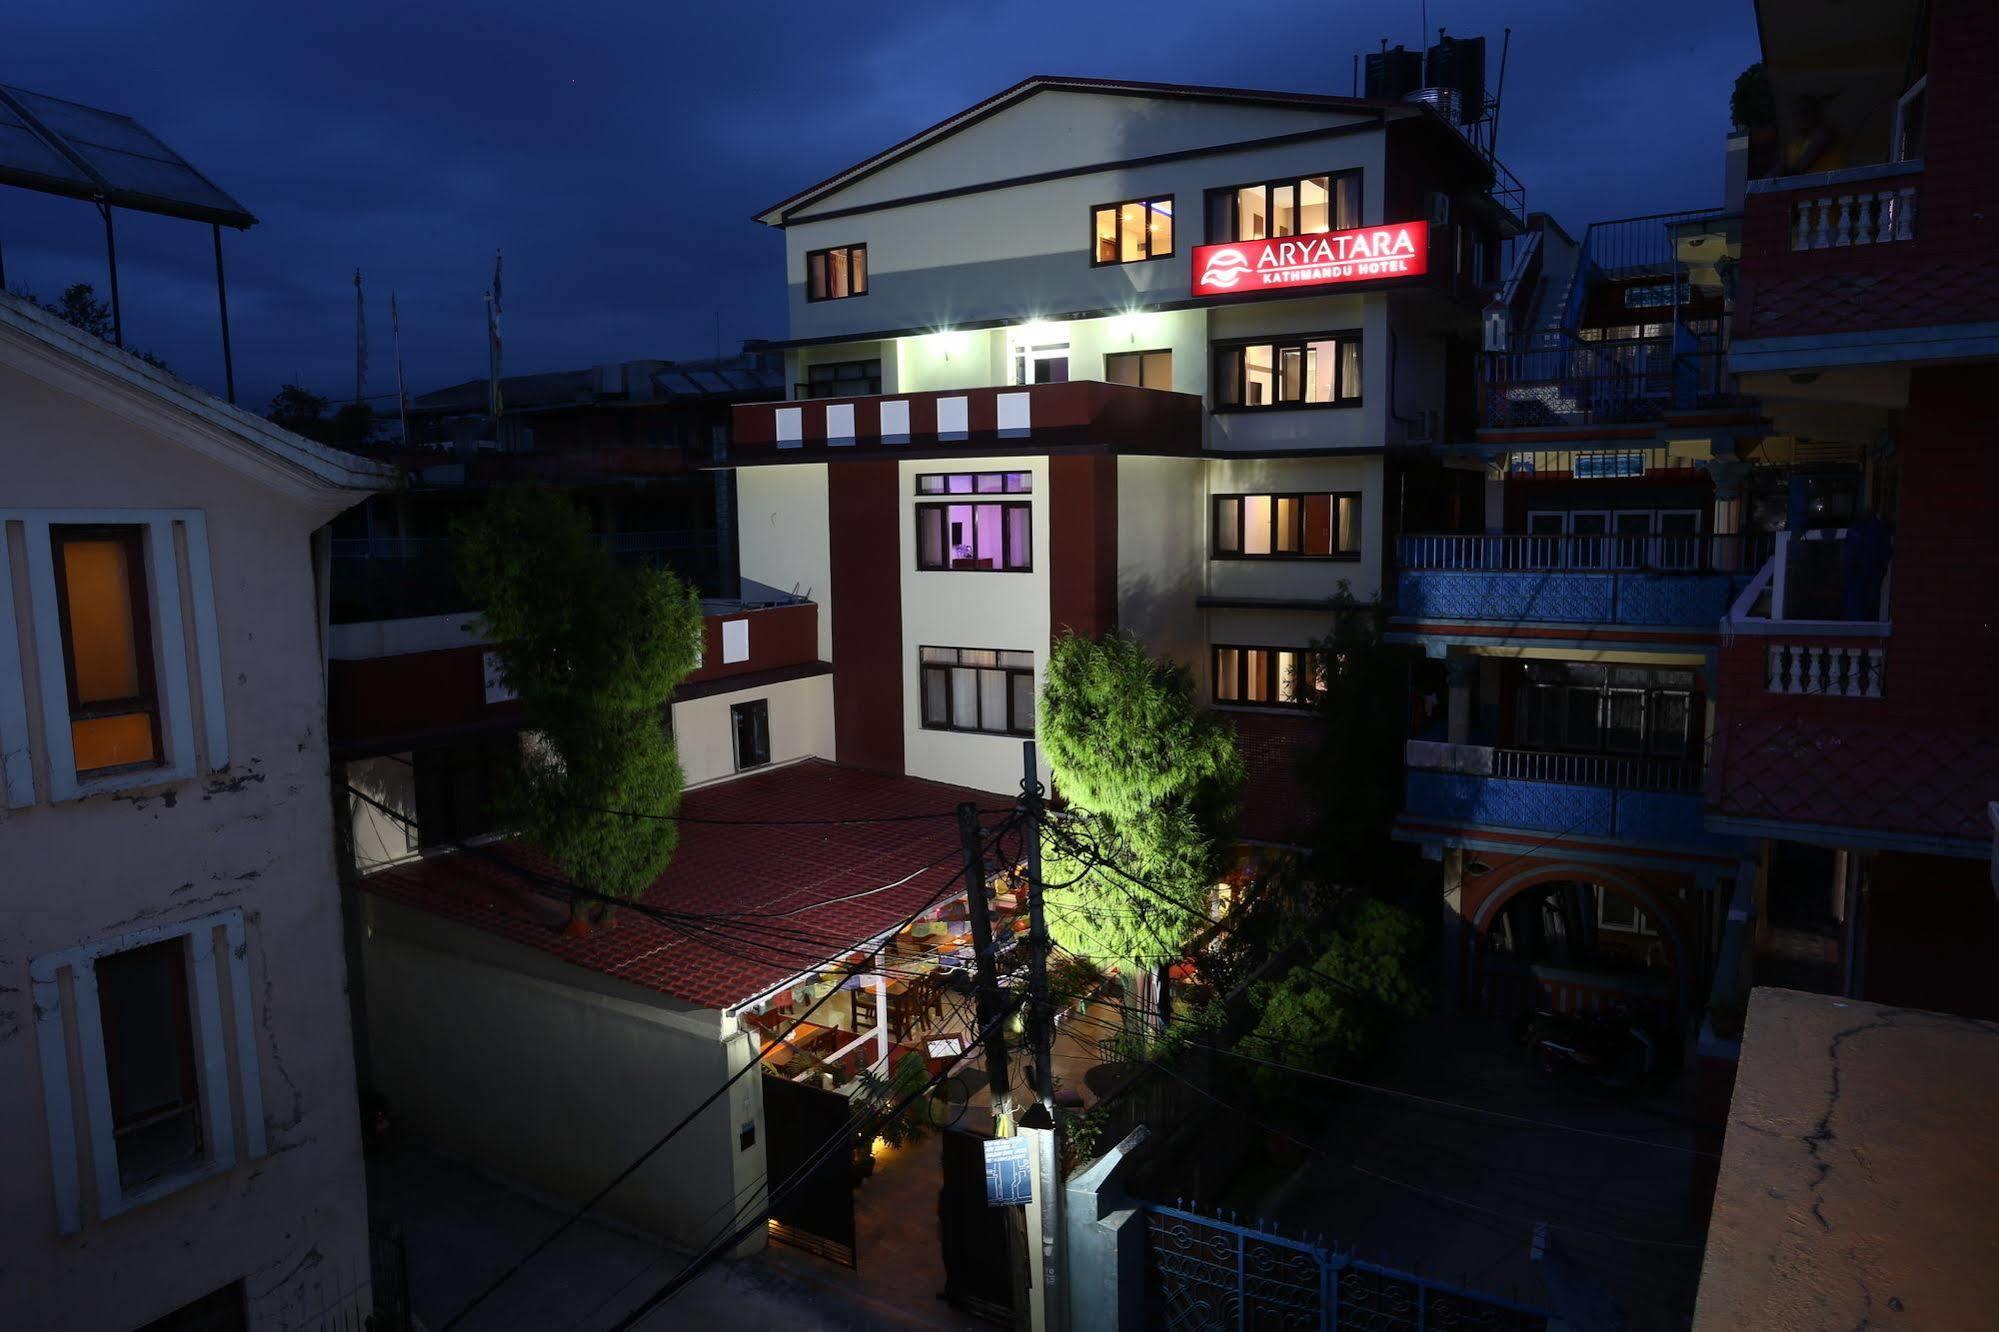 Aryatara Kathmandu Hotel Exterior photo